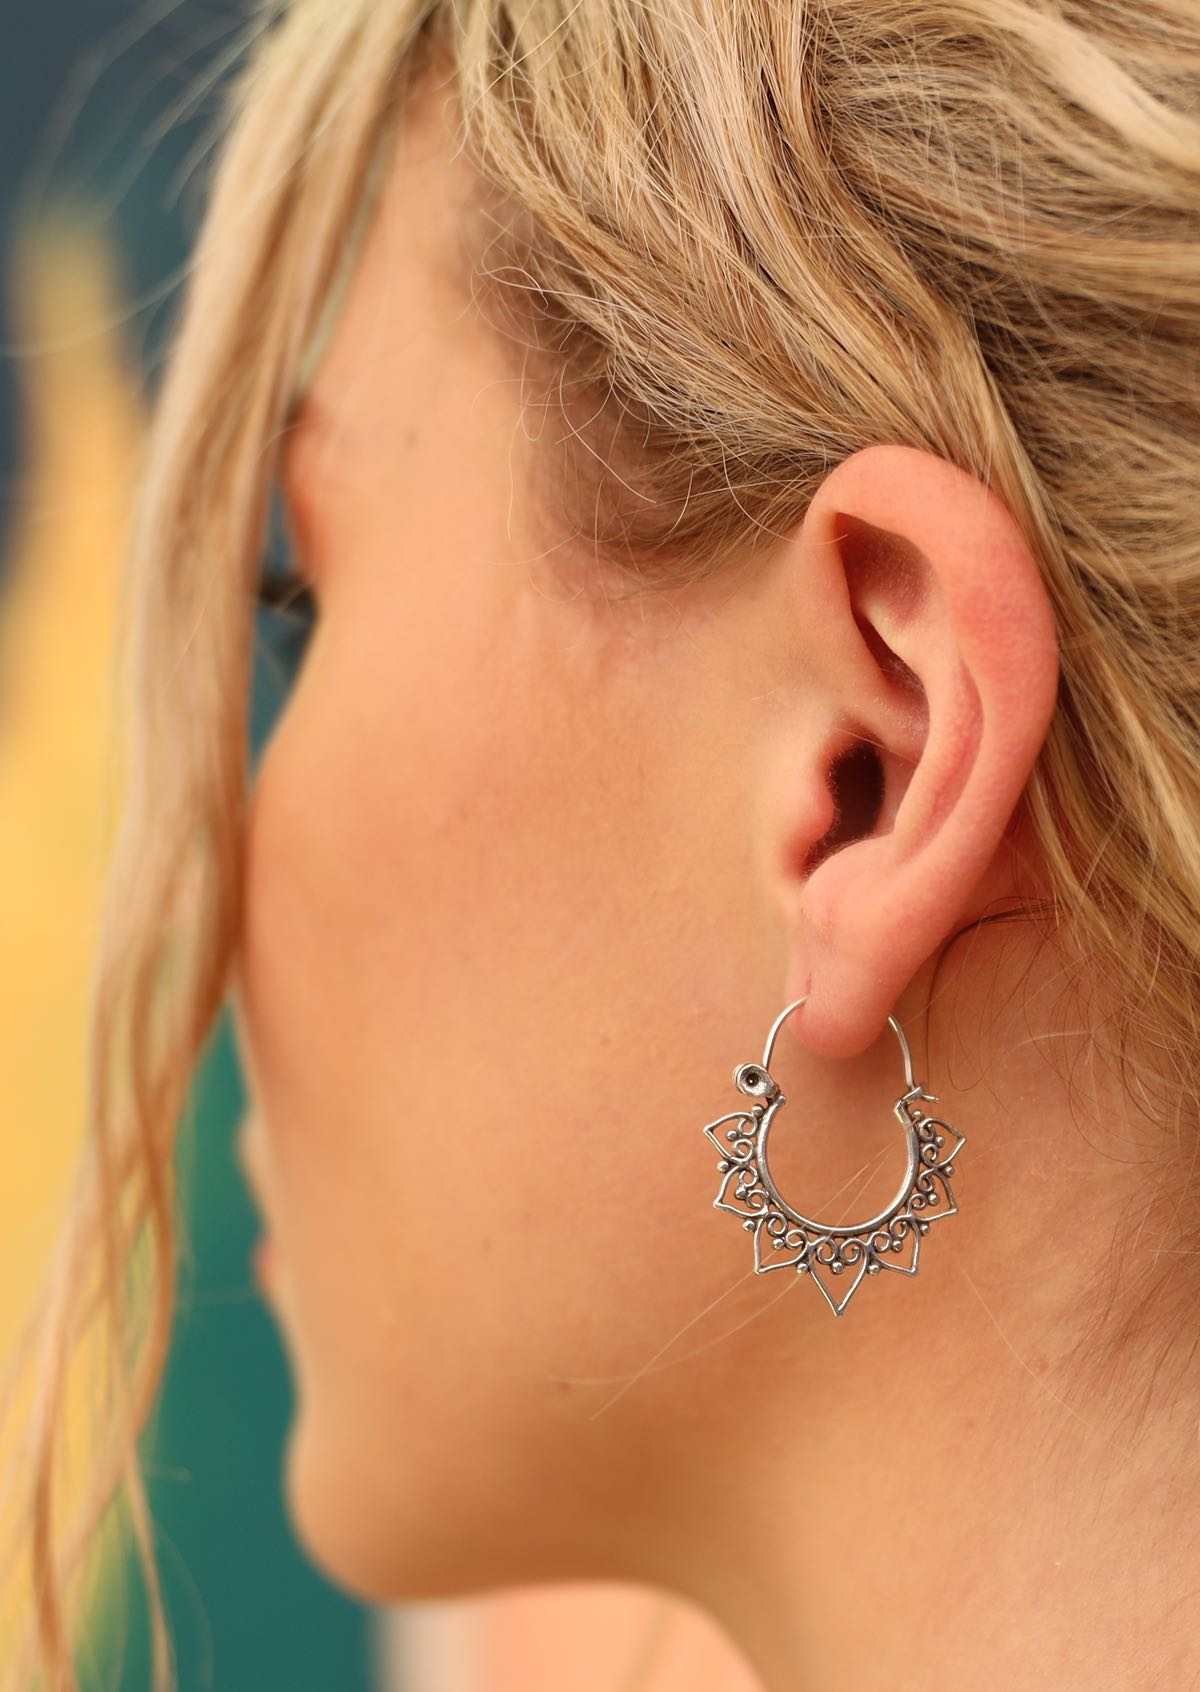 boho sterling silver hoop earrings on blond woman